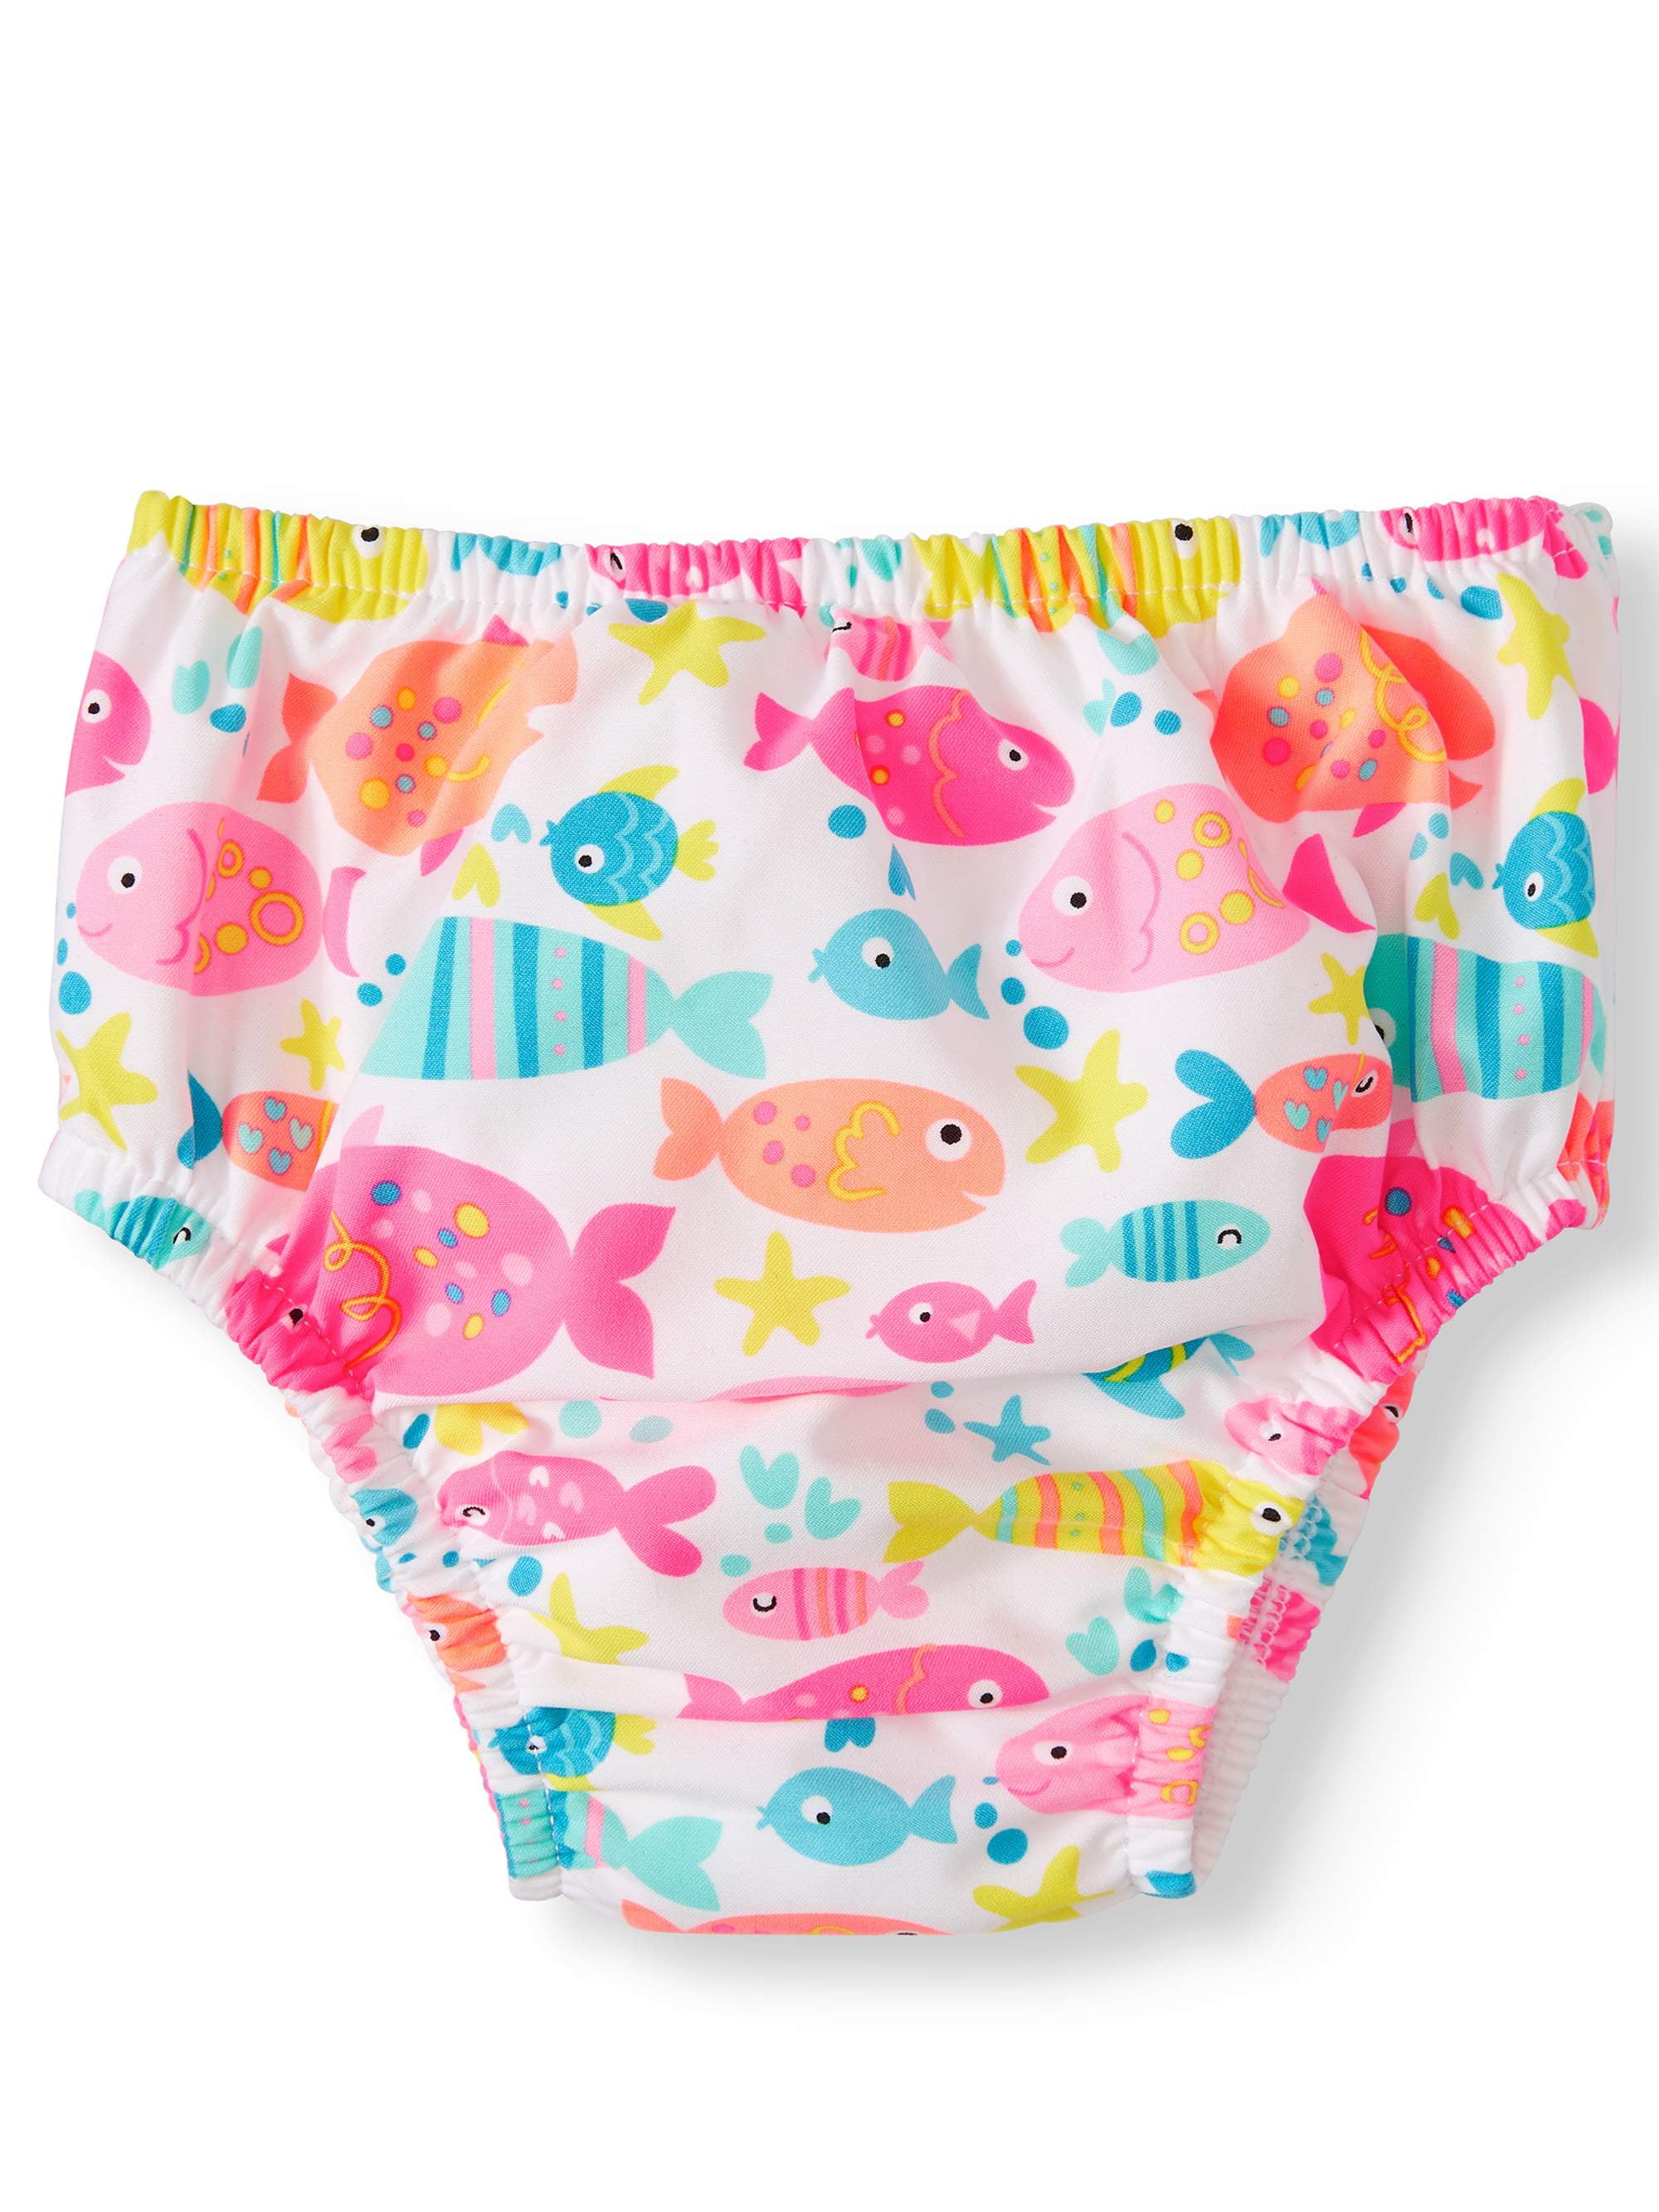 with Side Snaps Swim Time Girls Baby Reusable Swim Diaper UPF 50 